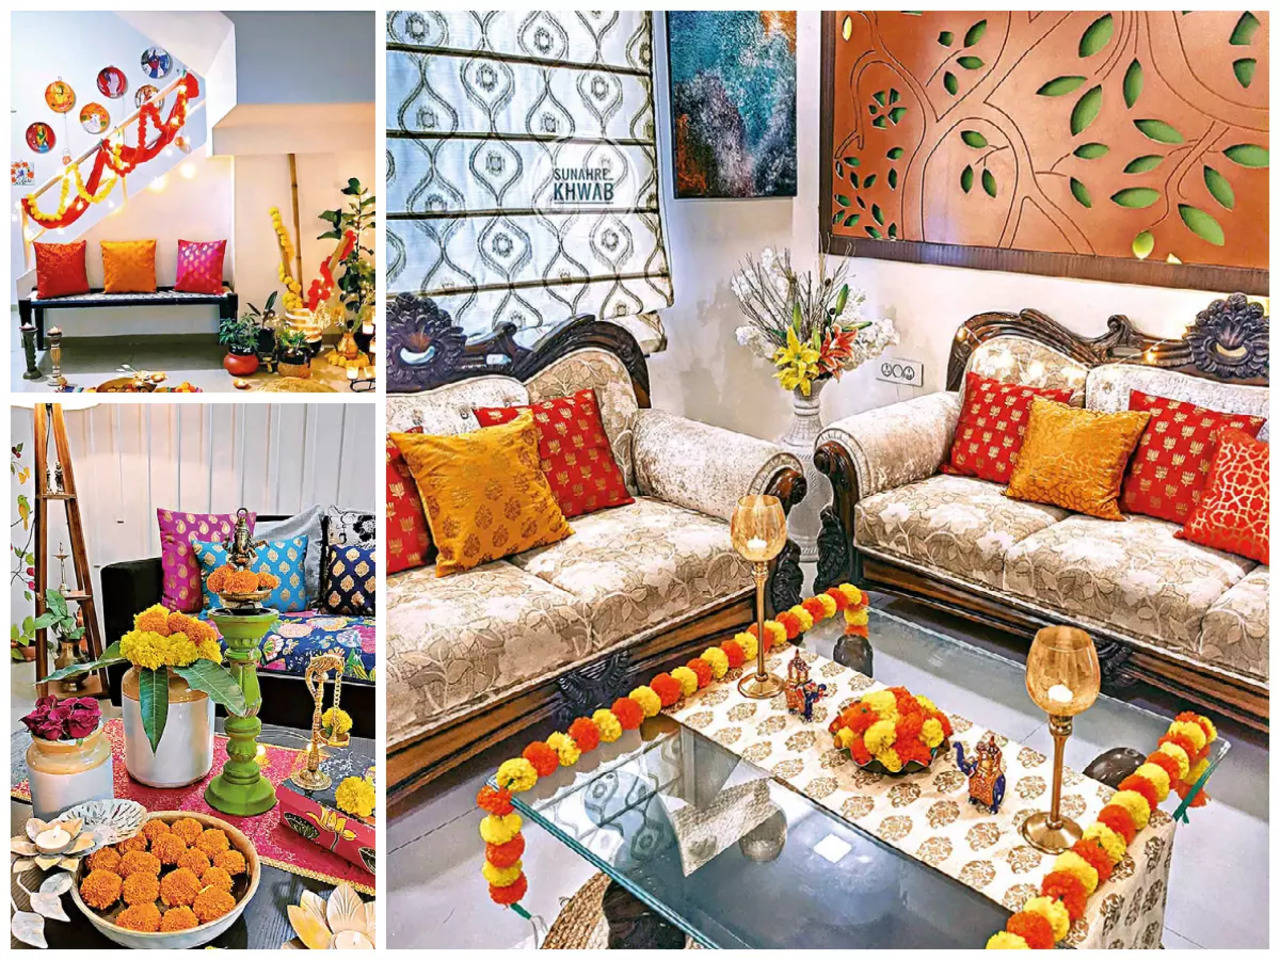 10+ Easy Last-minute Diwali Decoration Ideas for Home | Livspace